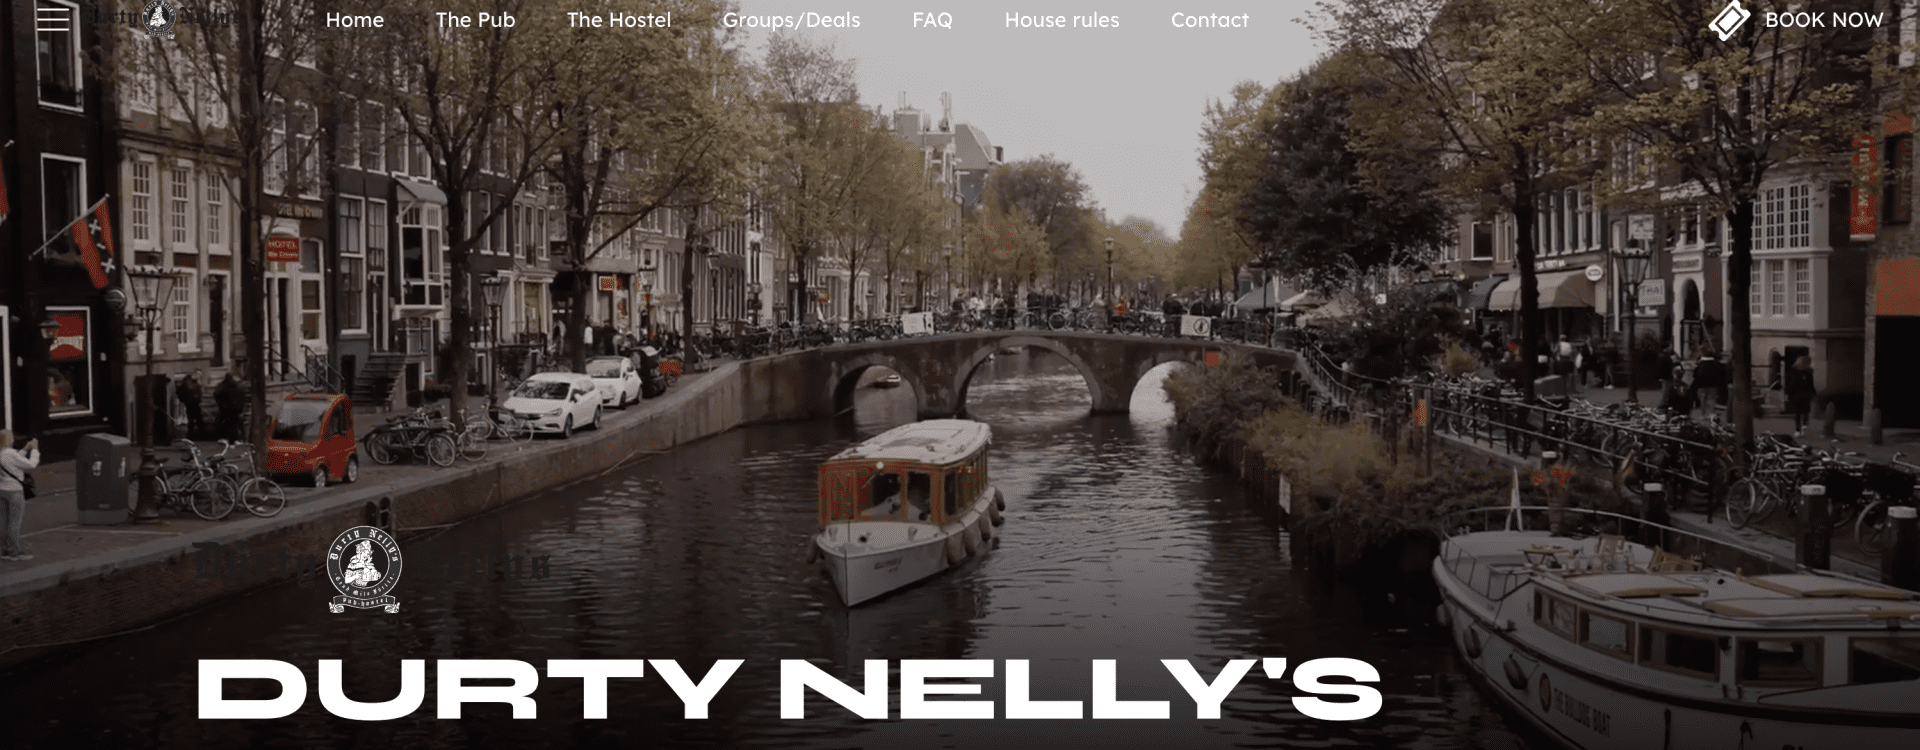 durtynellys-website